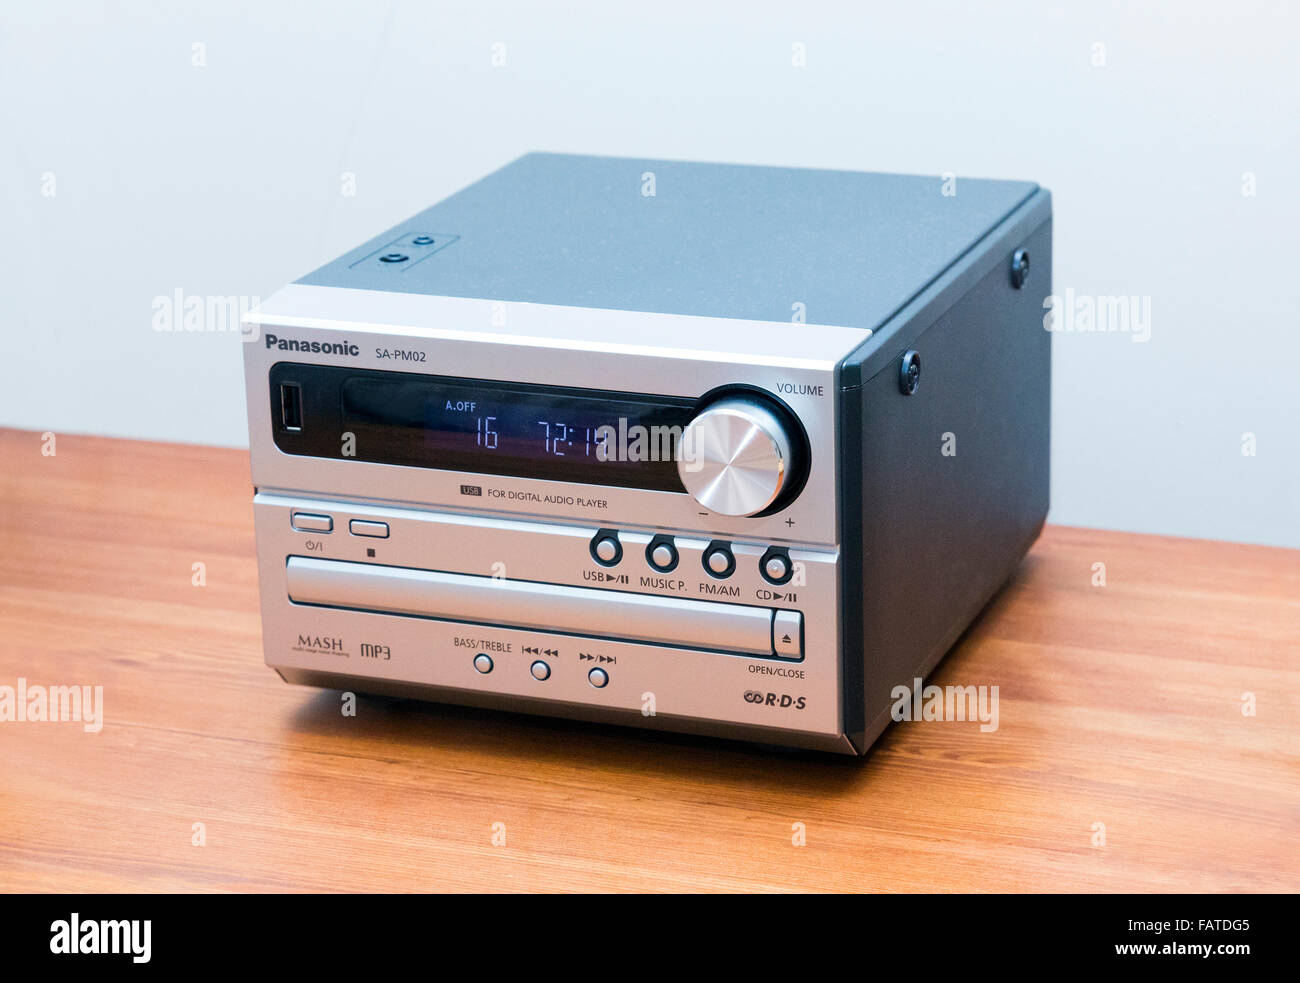 micro hifi unit with cd player and radio tuner made by Panasonic Stock Photo